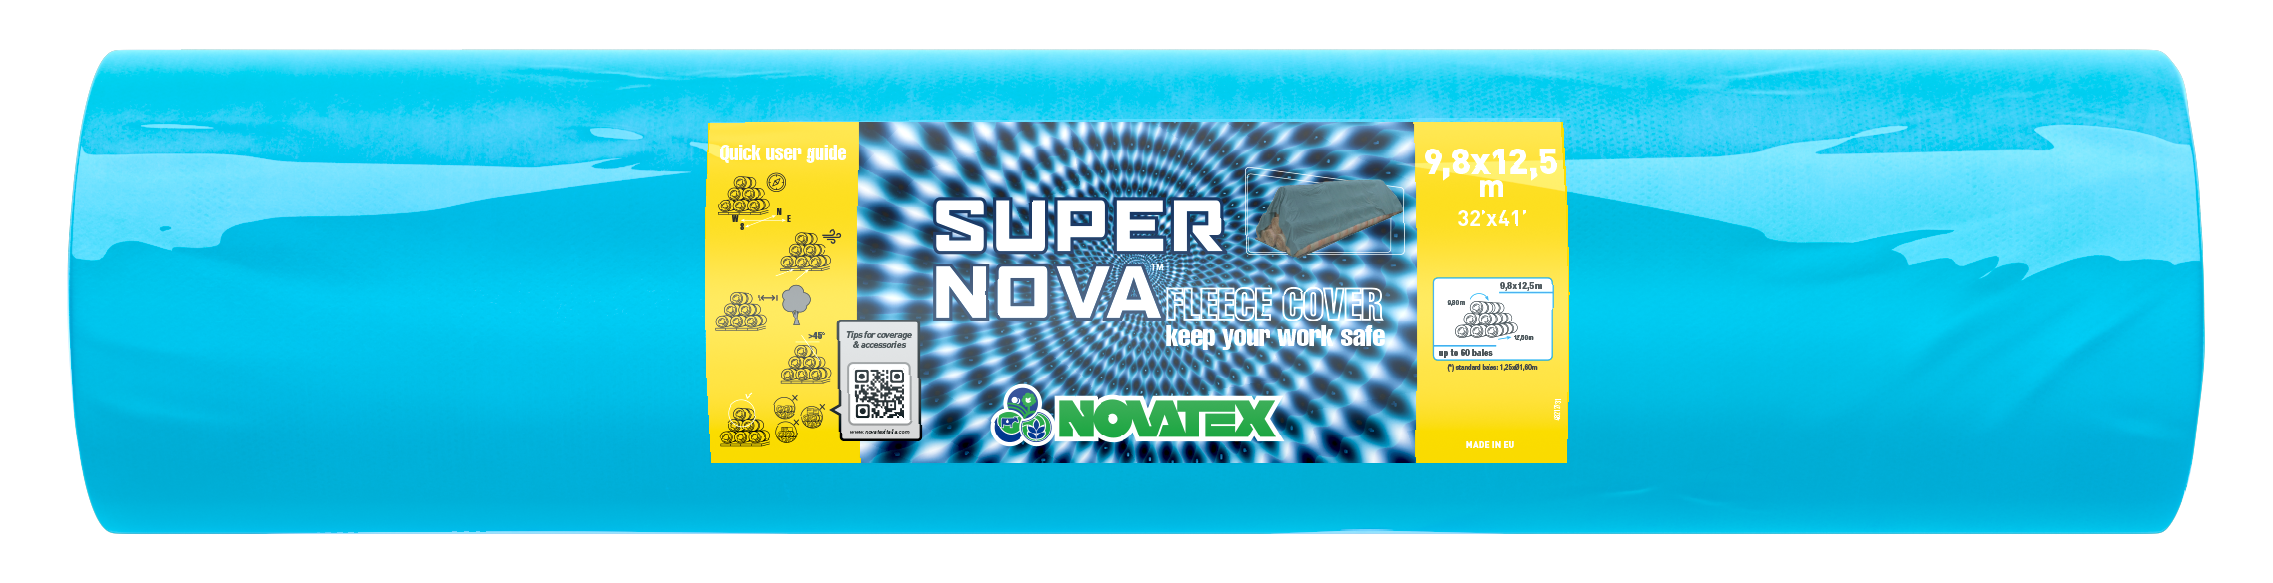 Novatex | Supernova Stack Cover breathable fleece